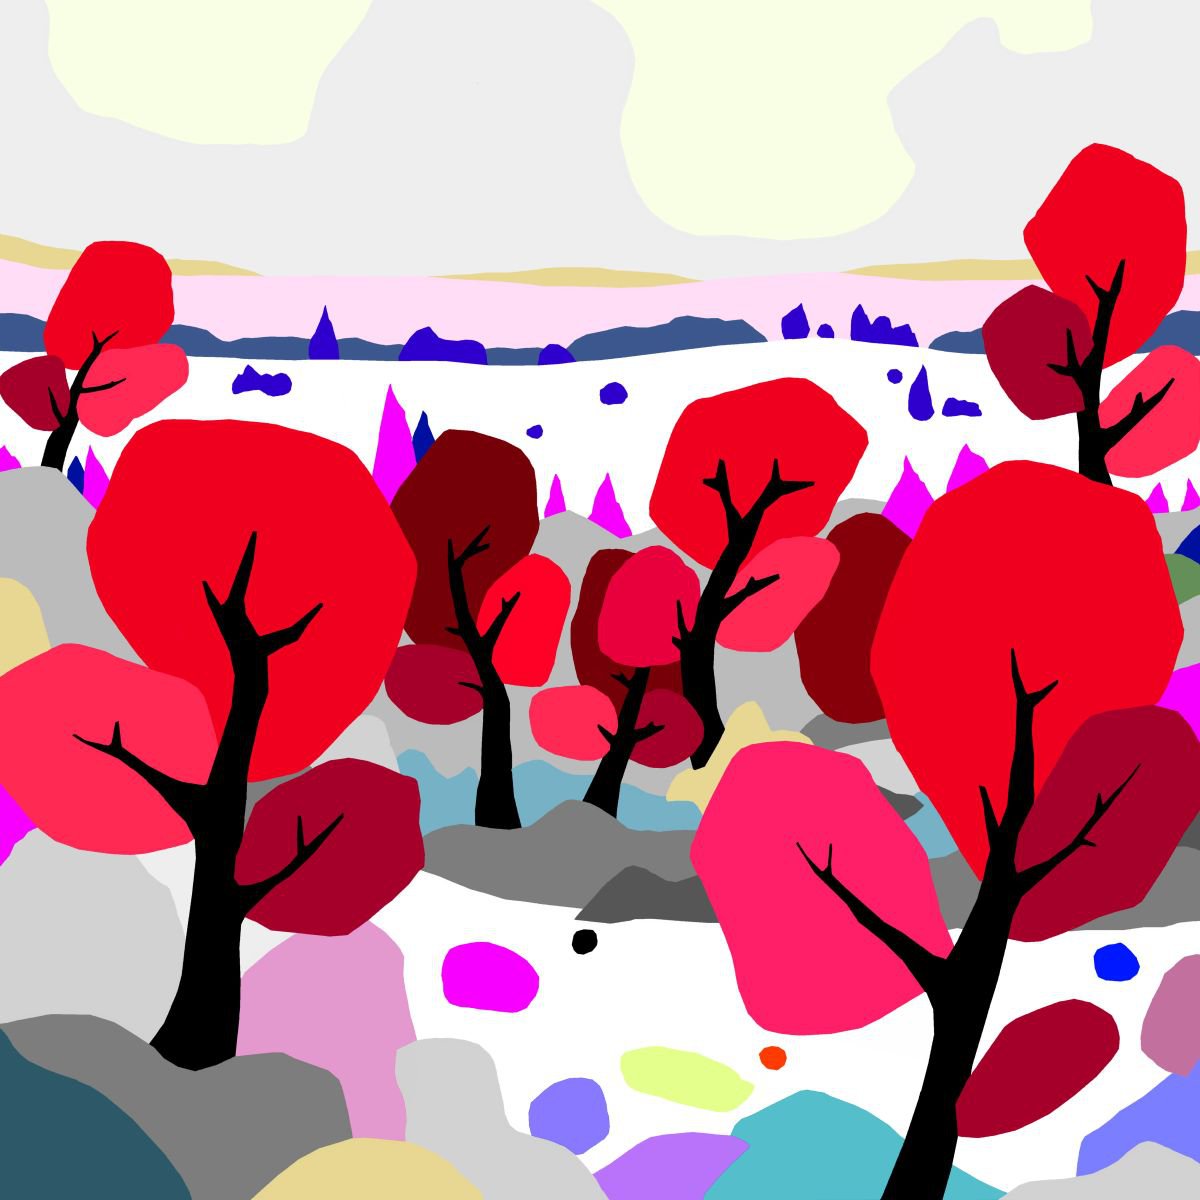 Red trees (arboles rojos) (pop art, landscape) by Alejos - Pop Art landscapes